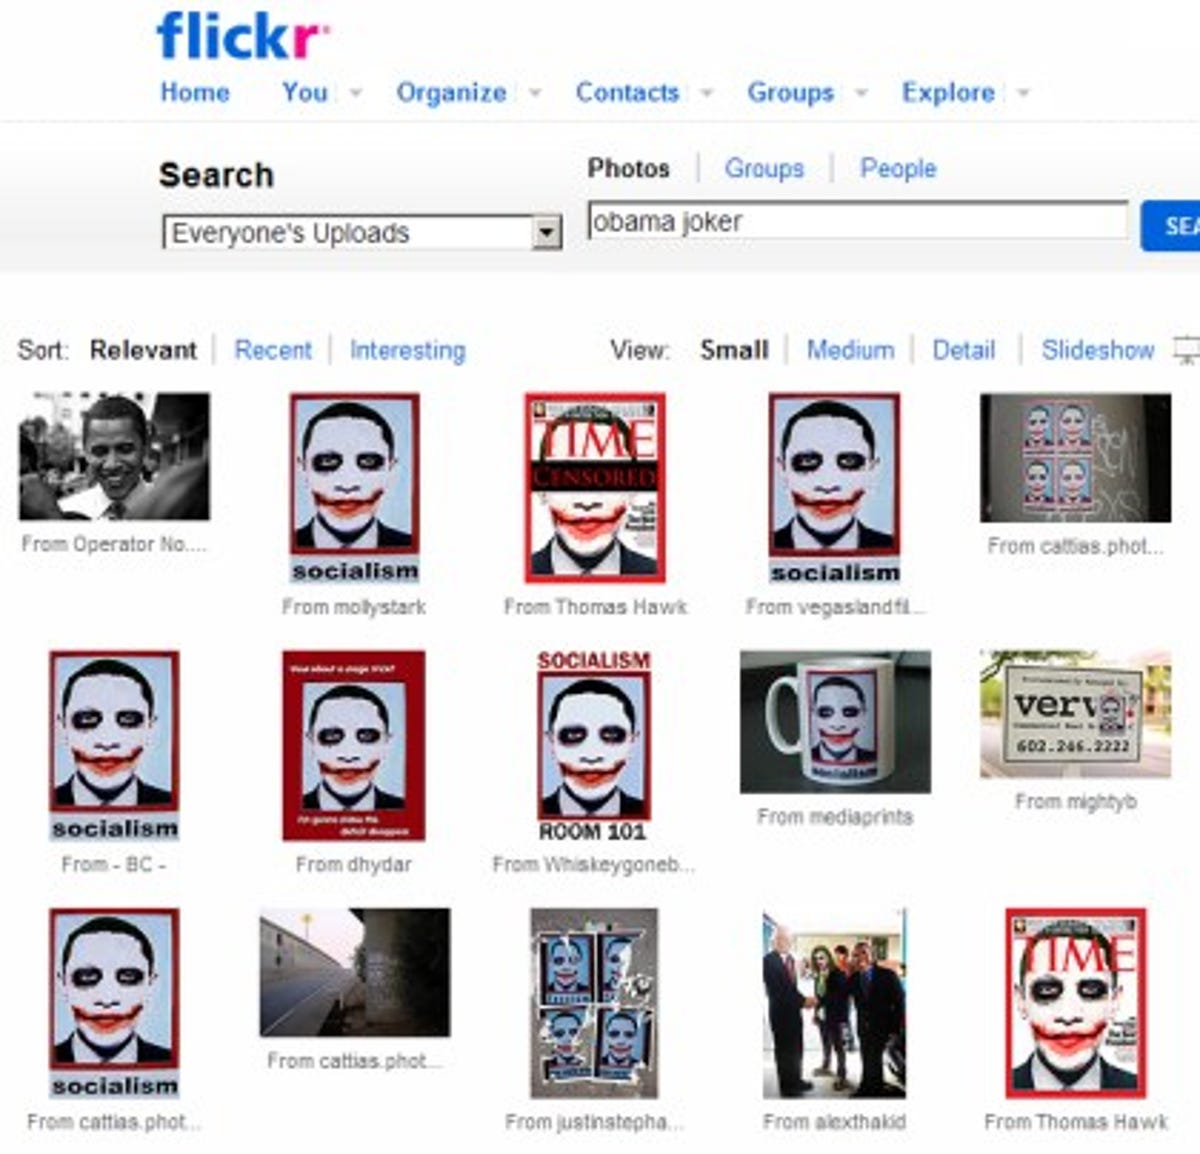 The Obama Joker image still is widespread on Flickr.